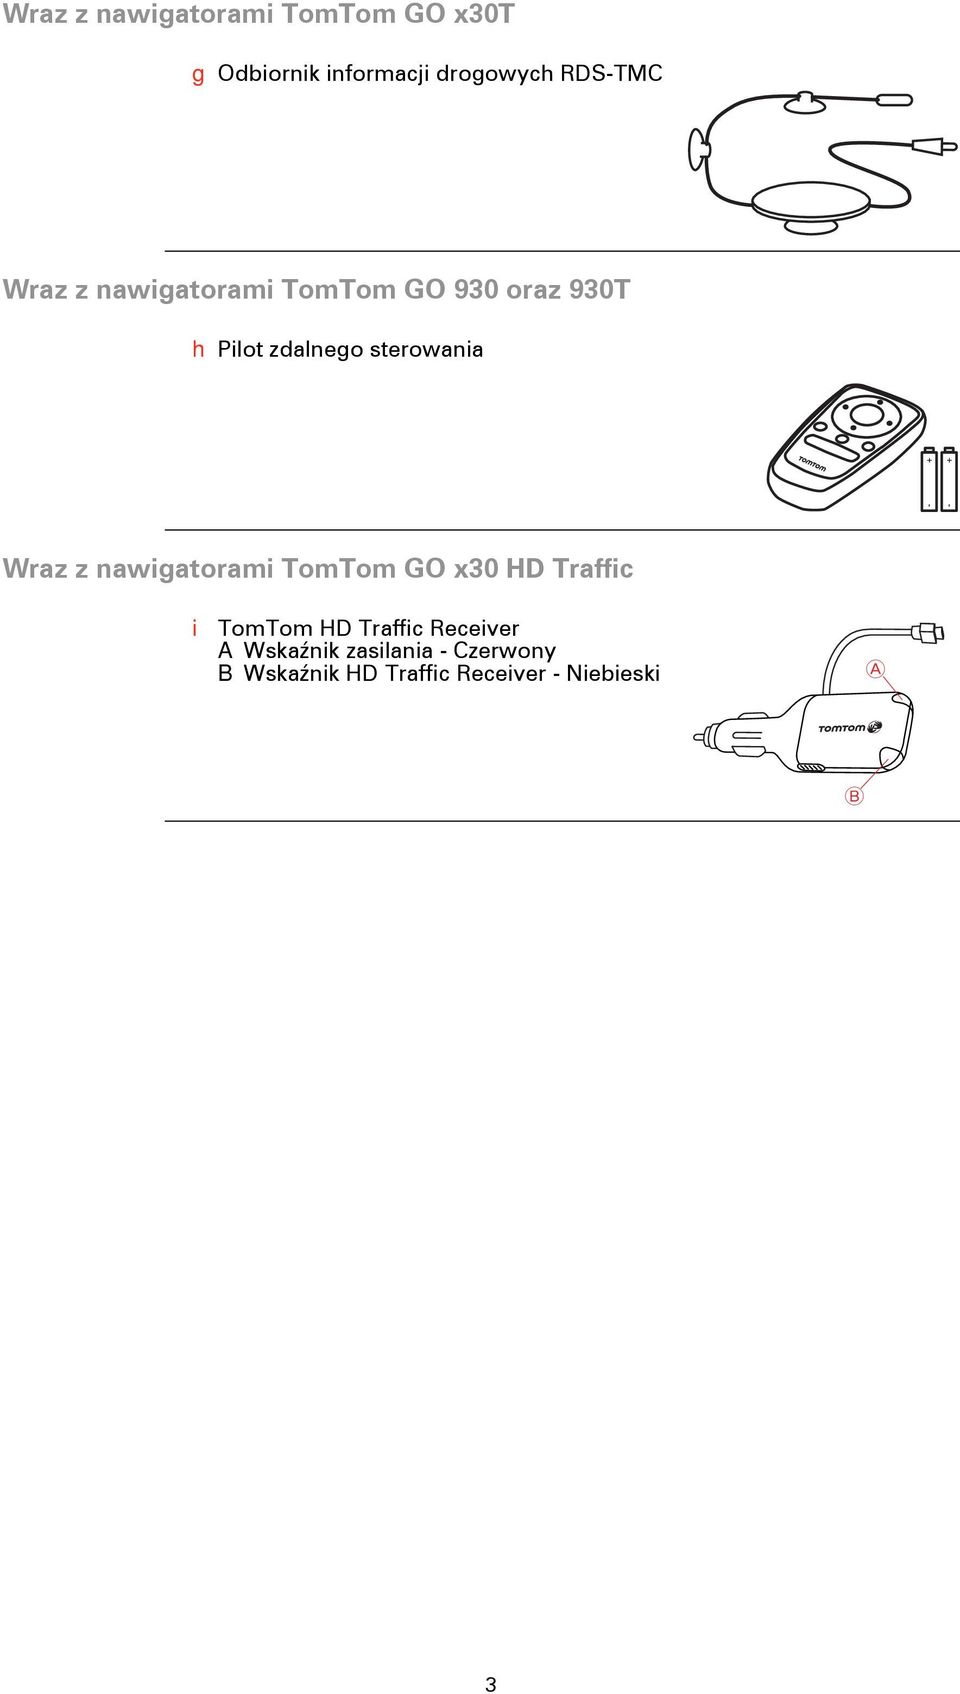 Wraz z nawigatorami TomTom GO x30 HD Traffic i TomTom HD Traffic Receiver A